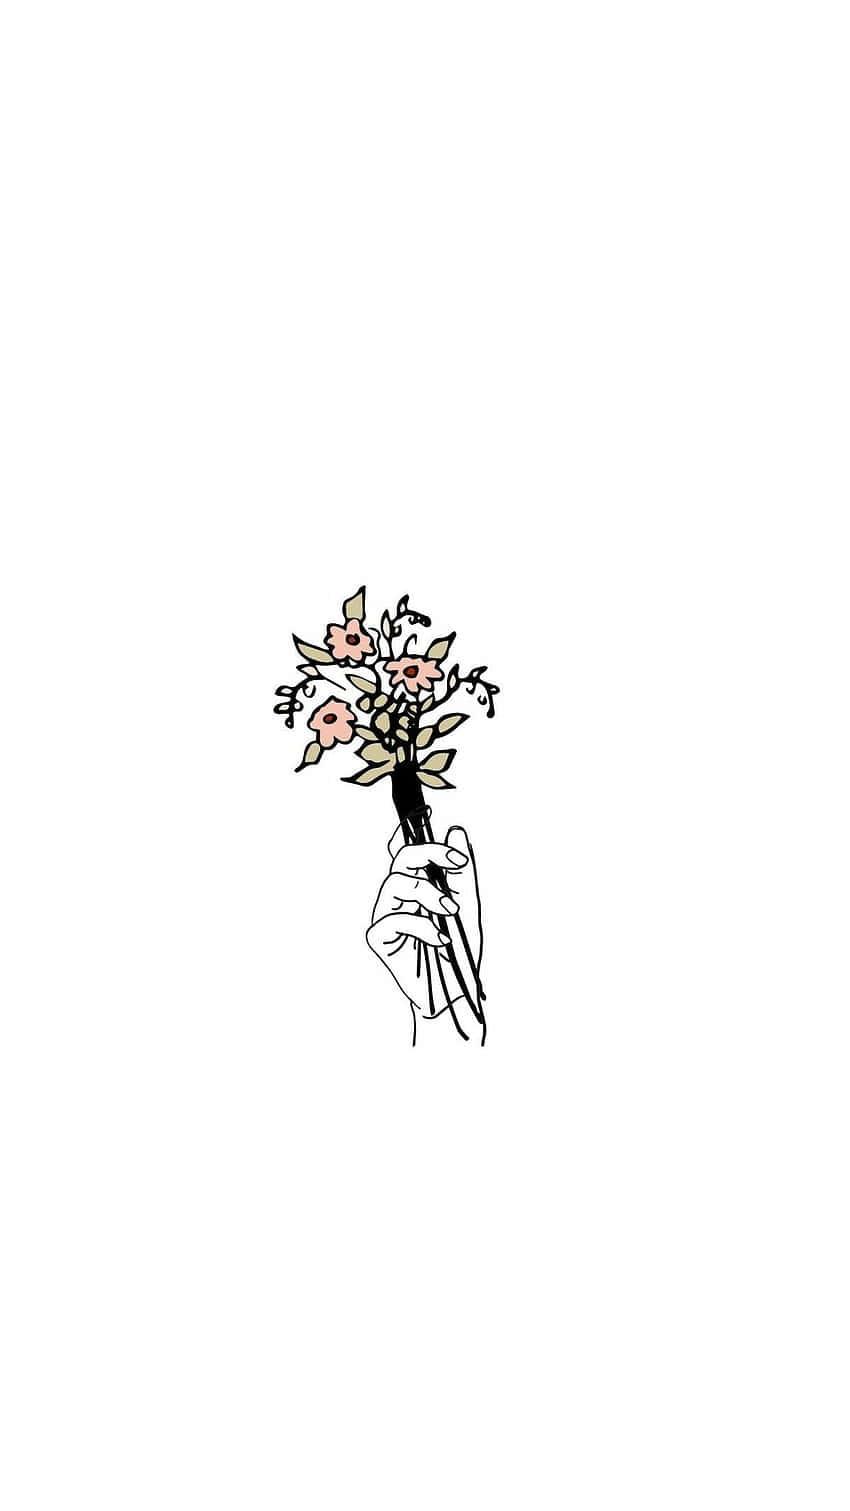 Minimalist Floral Hand Sketch.jpg Wallpaper